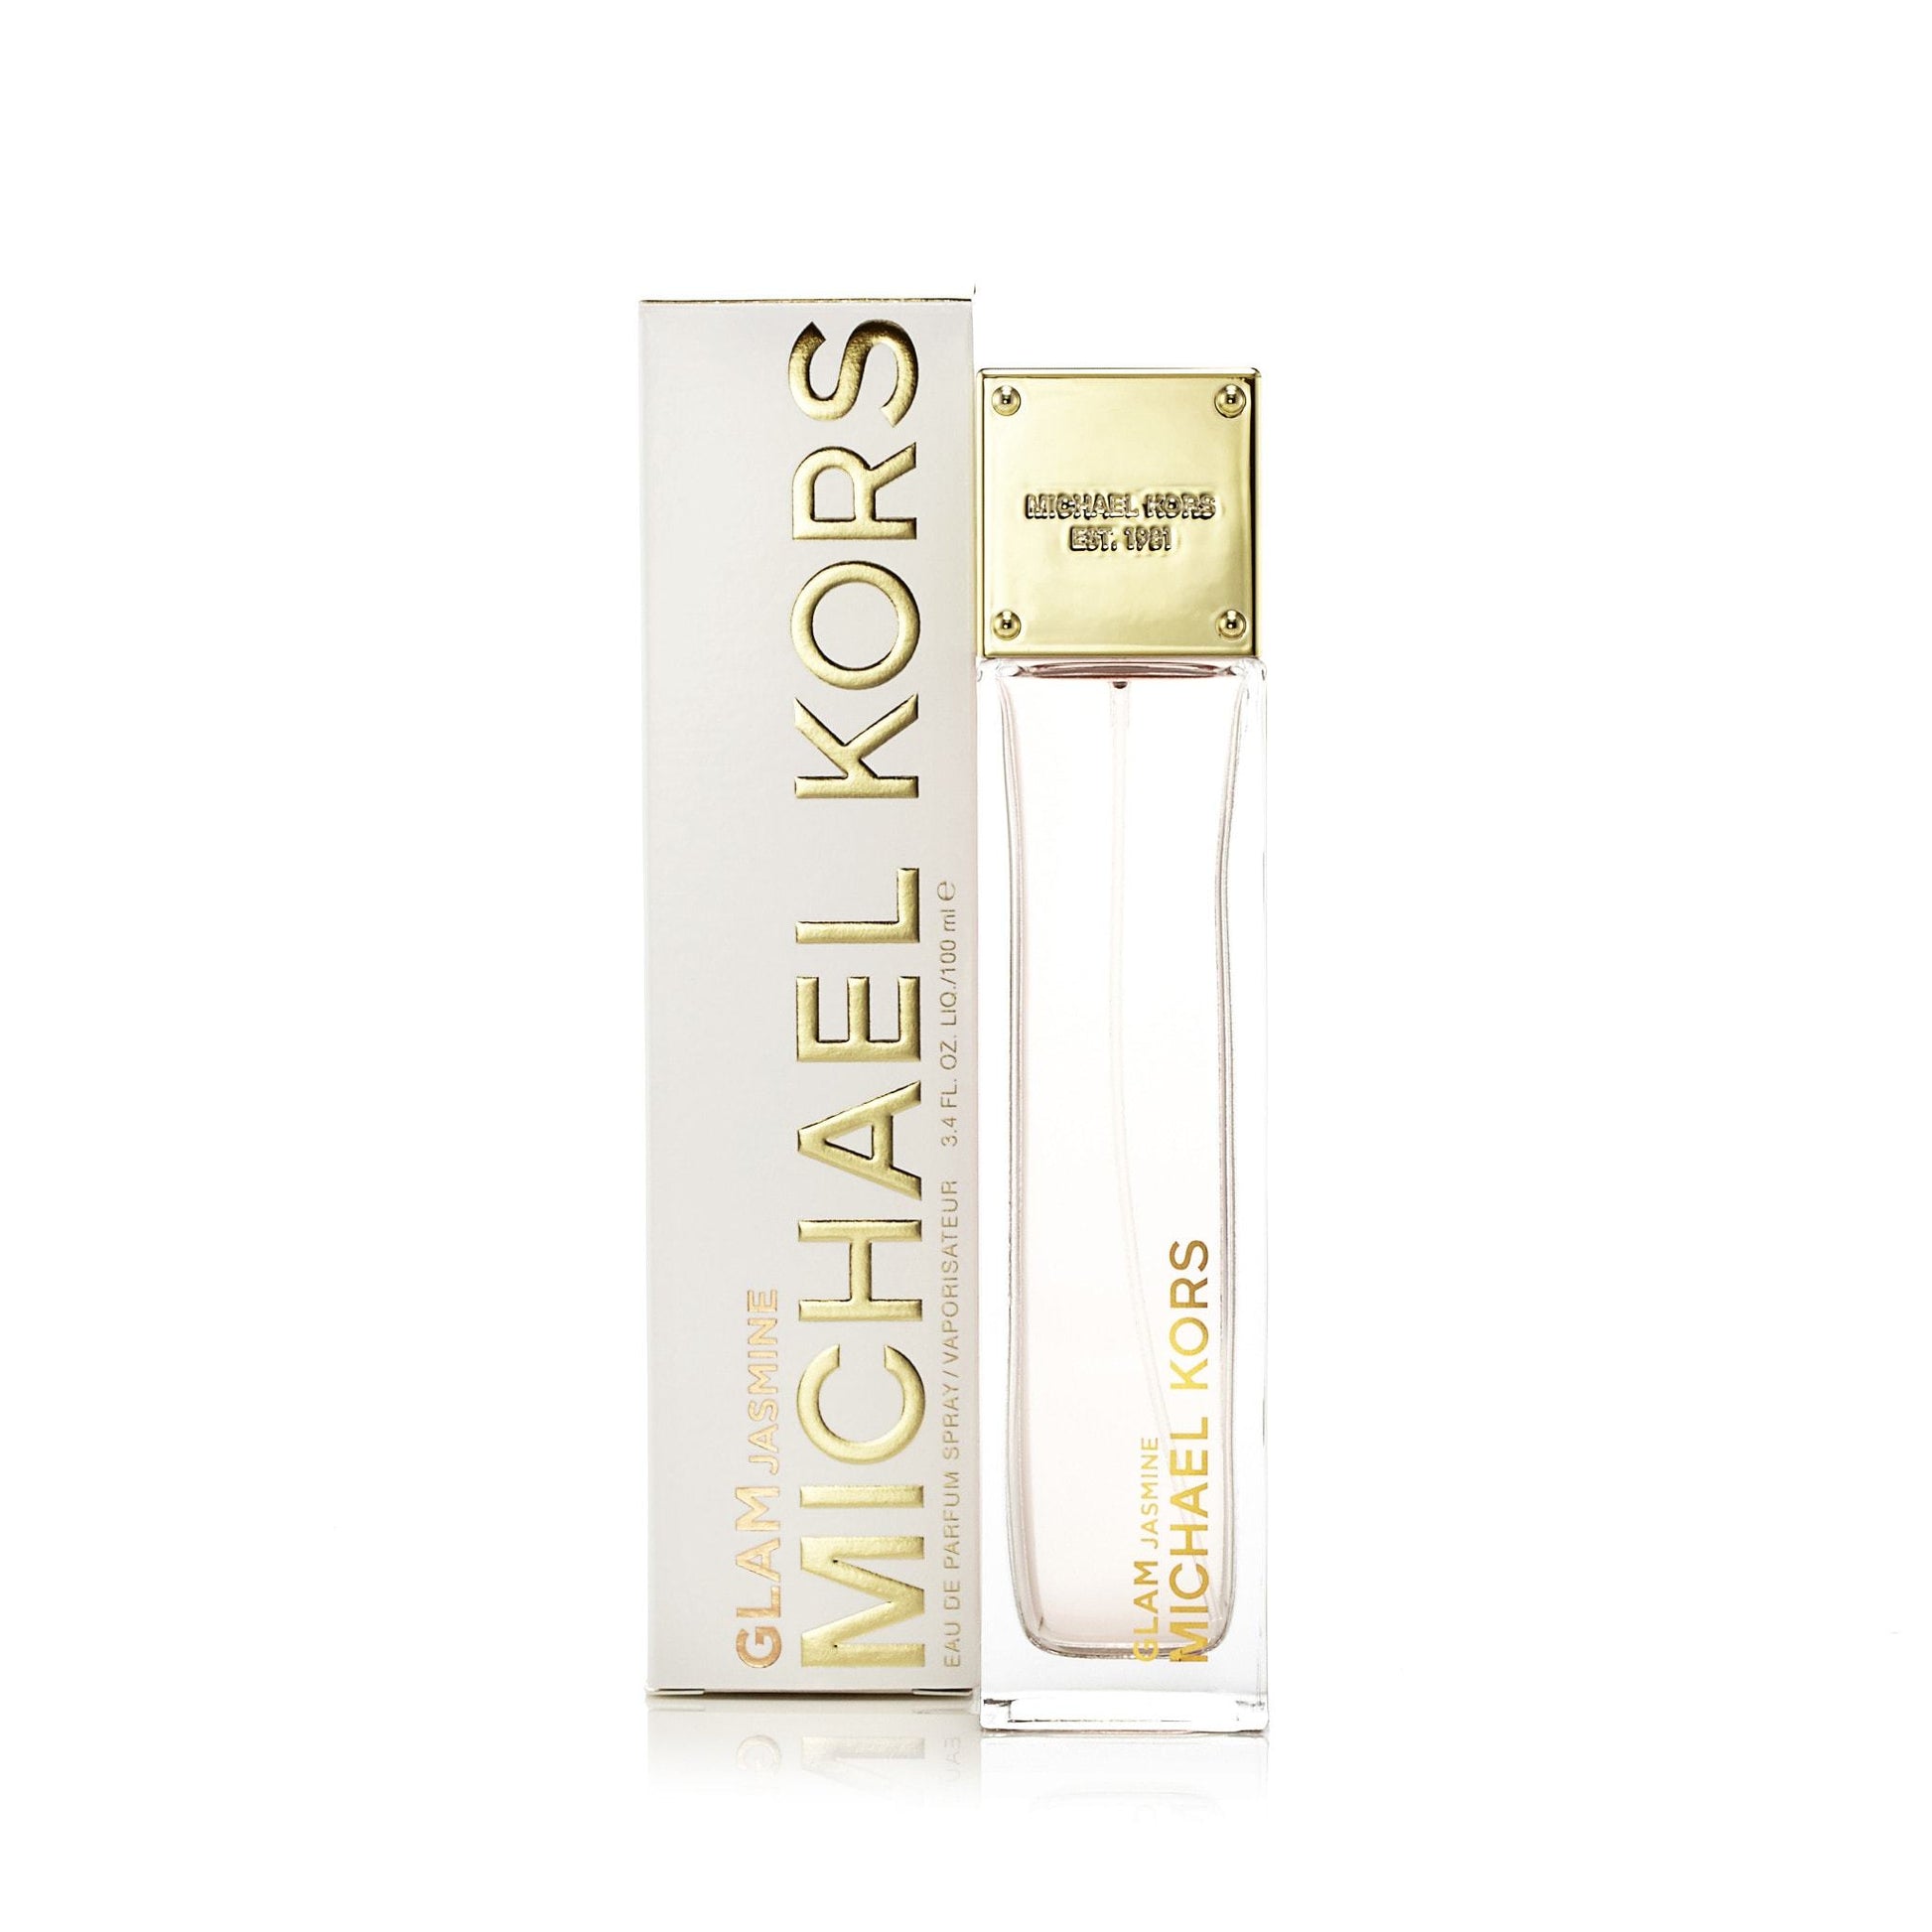 Glam Jasmine Eau de Parfum Spray for Women by Michael Kors, Product image 1